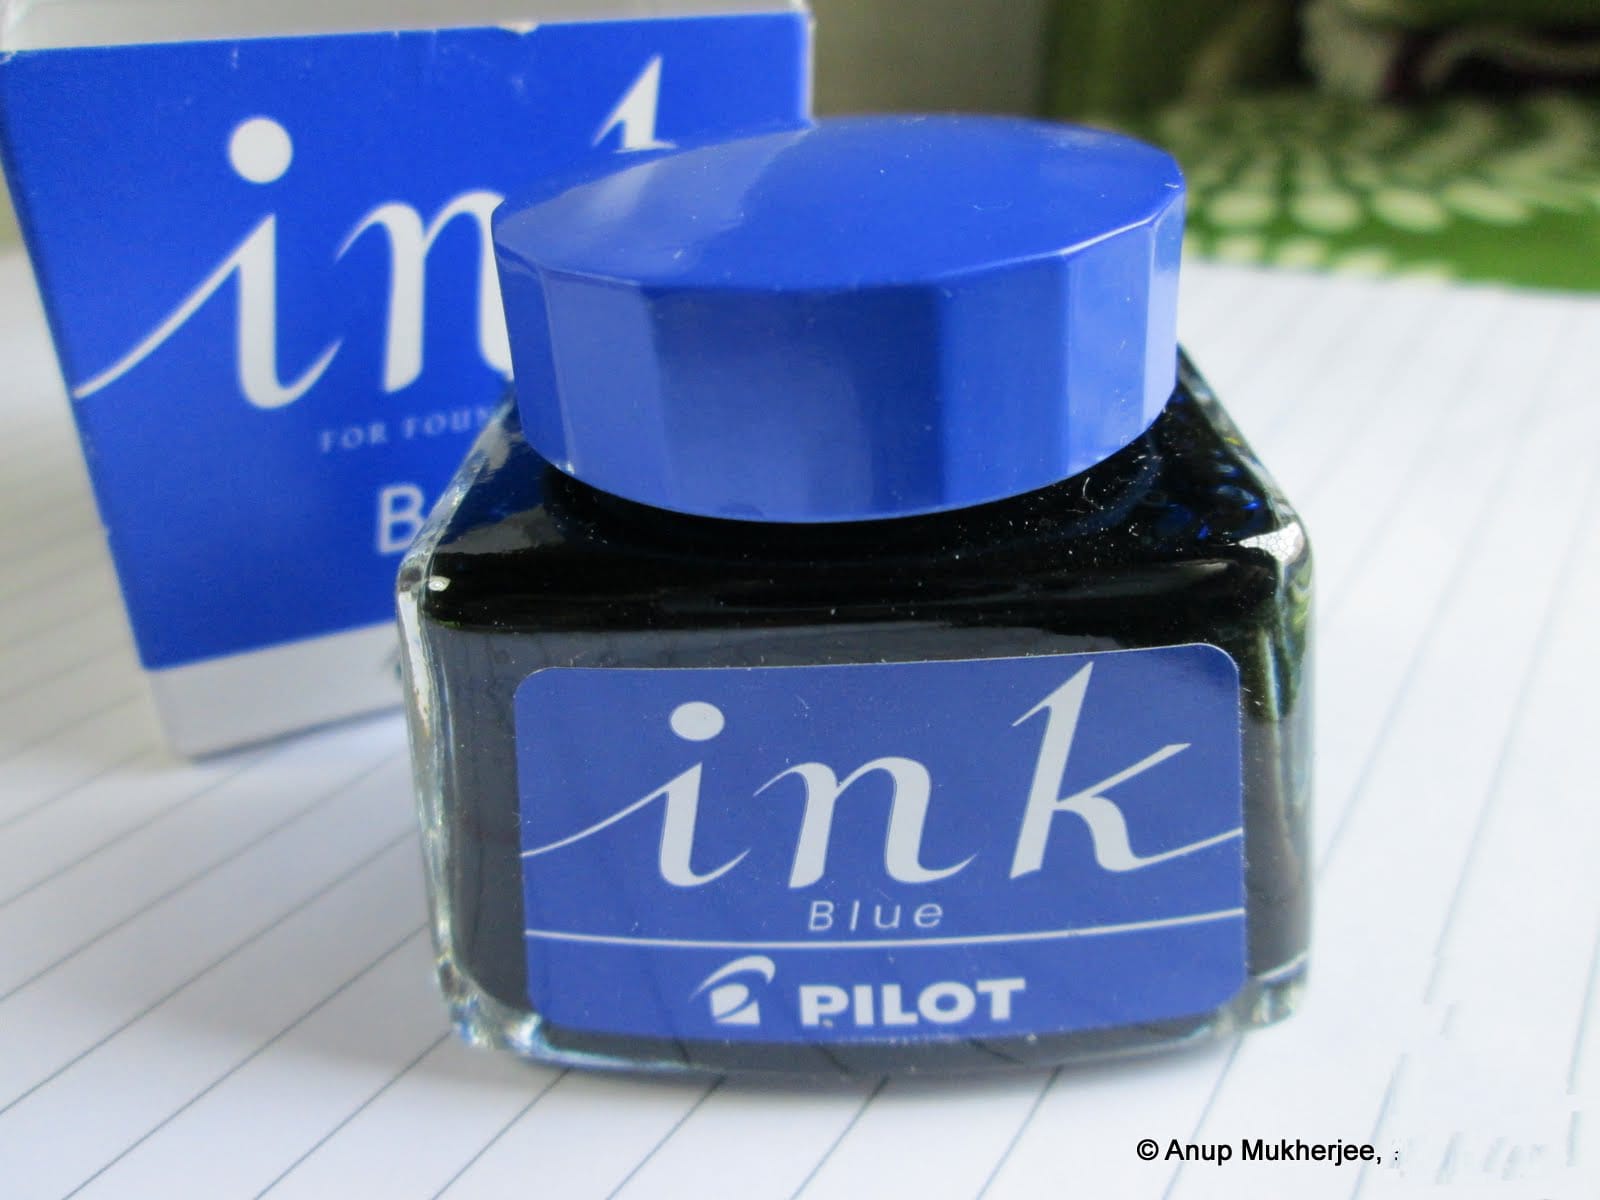 Pilot ink